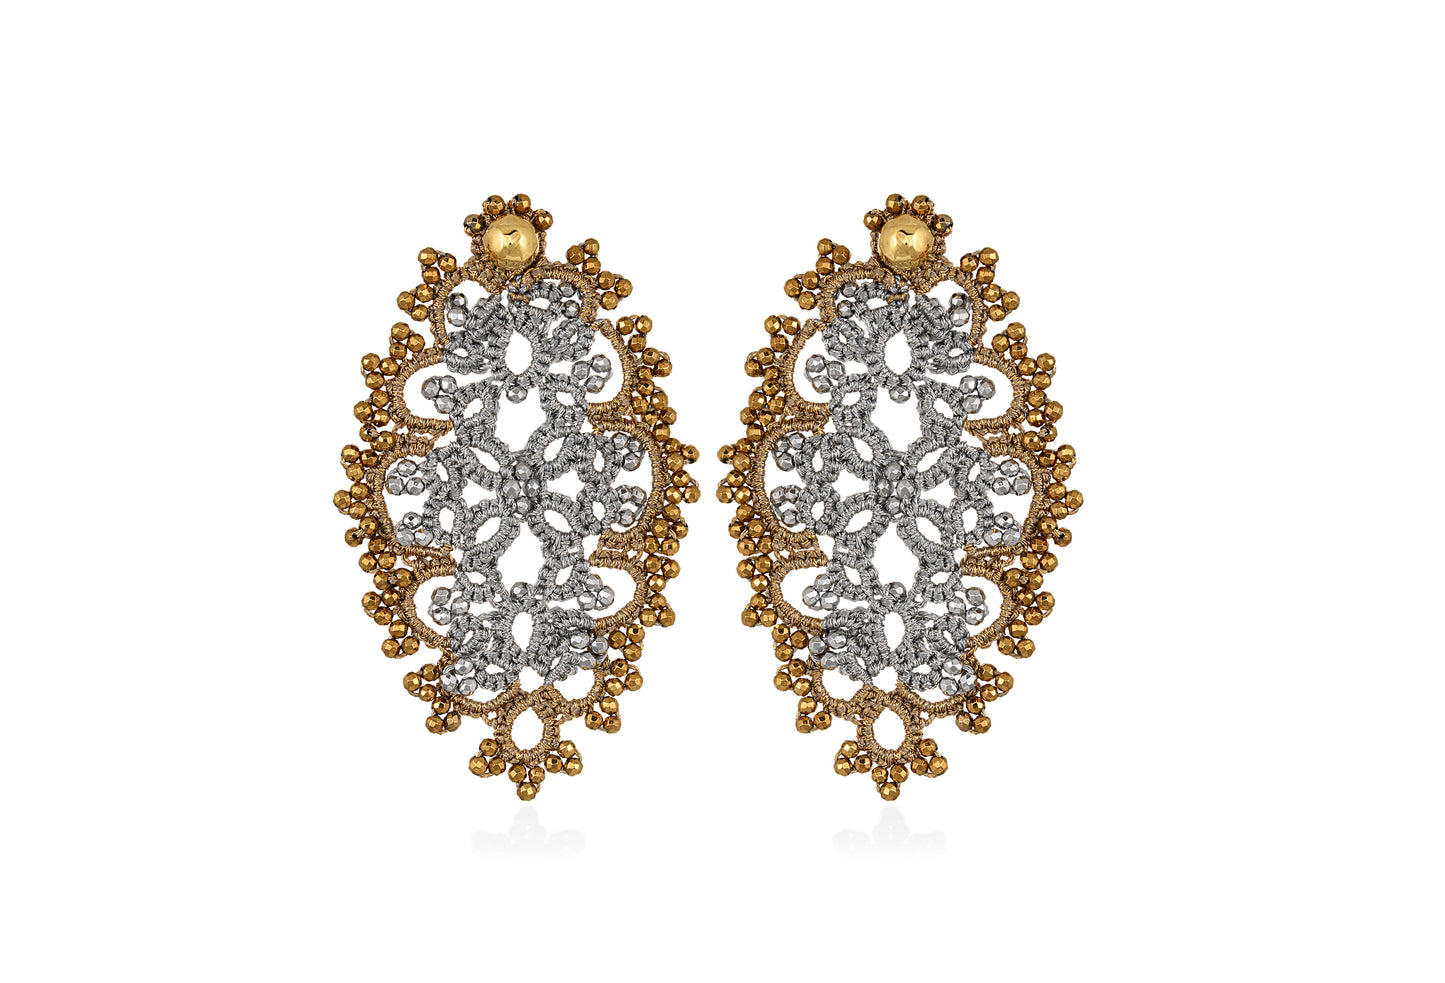 Diana lace earrings, grey gold